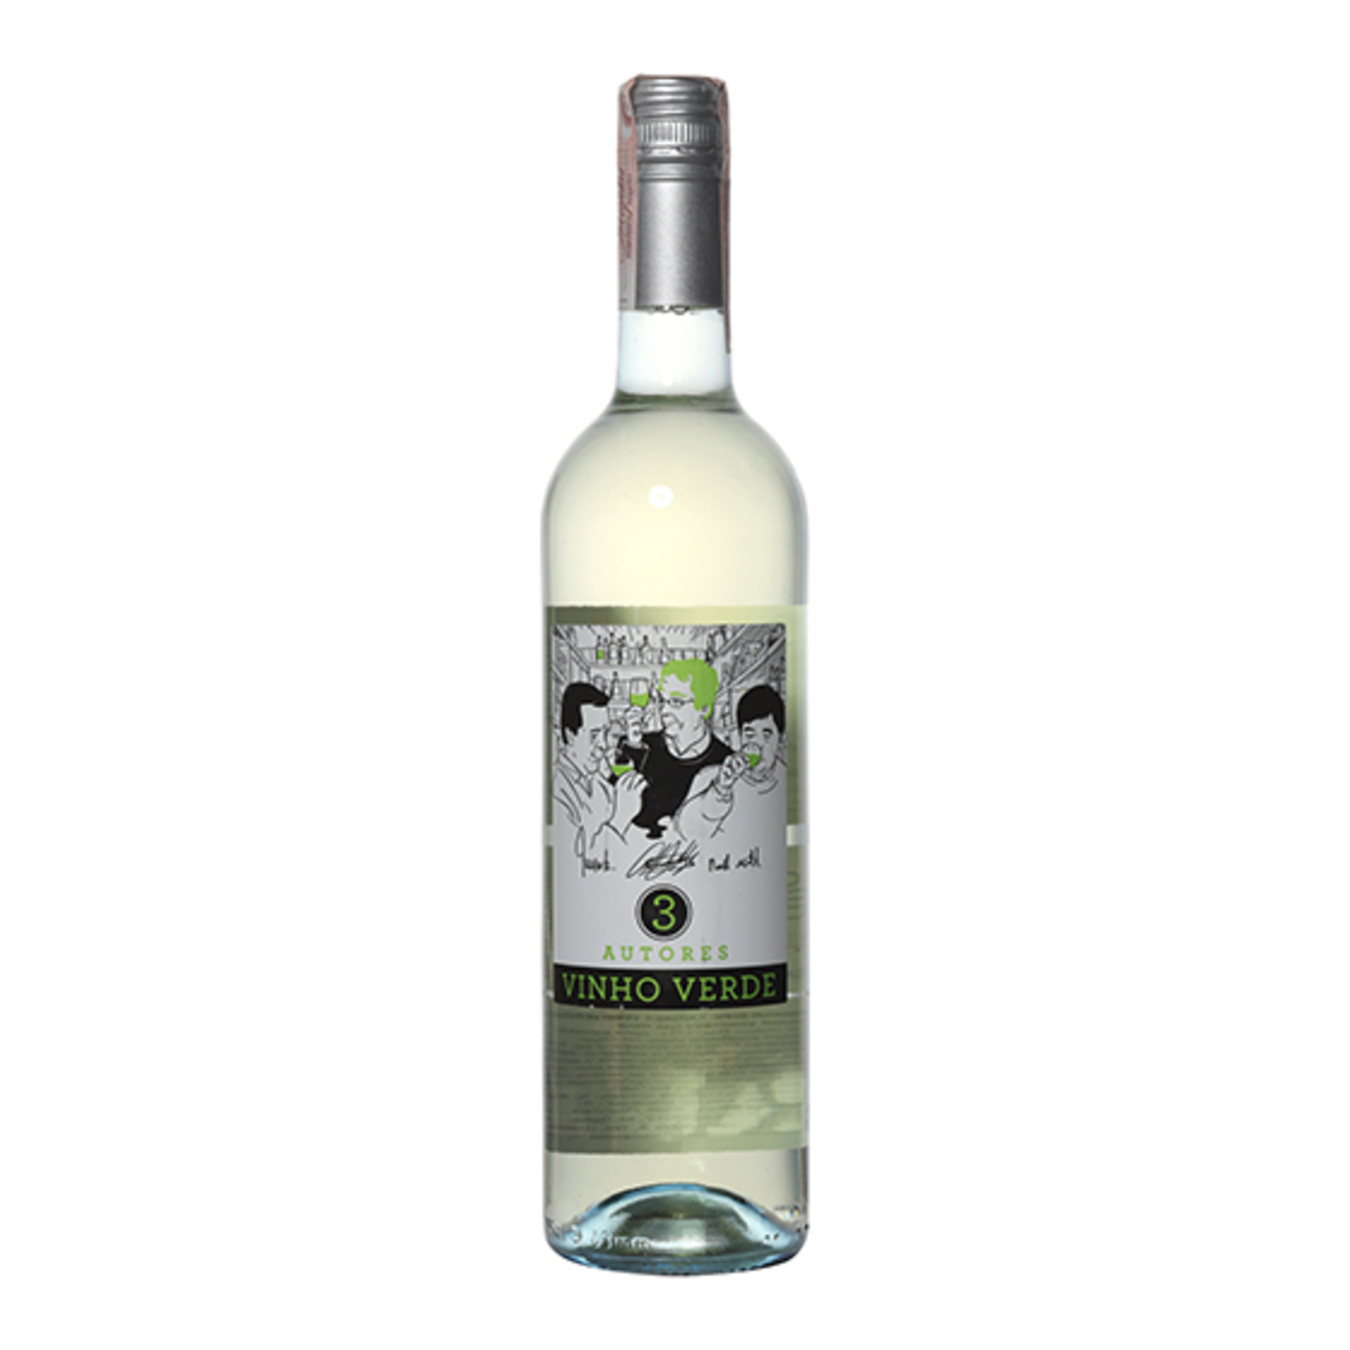 Vidigal 3 Autores Vinho Verde white dry 9,5% 0,75l